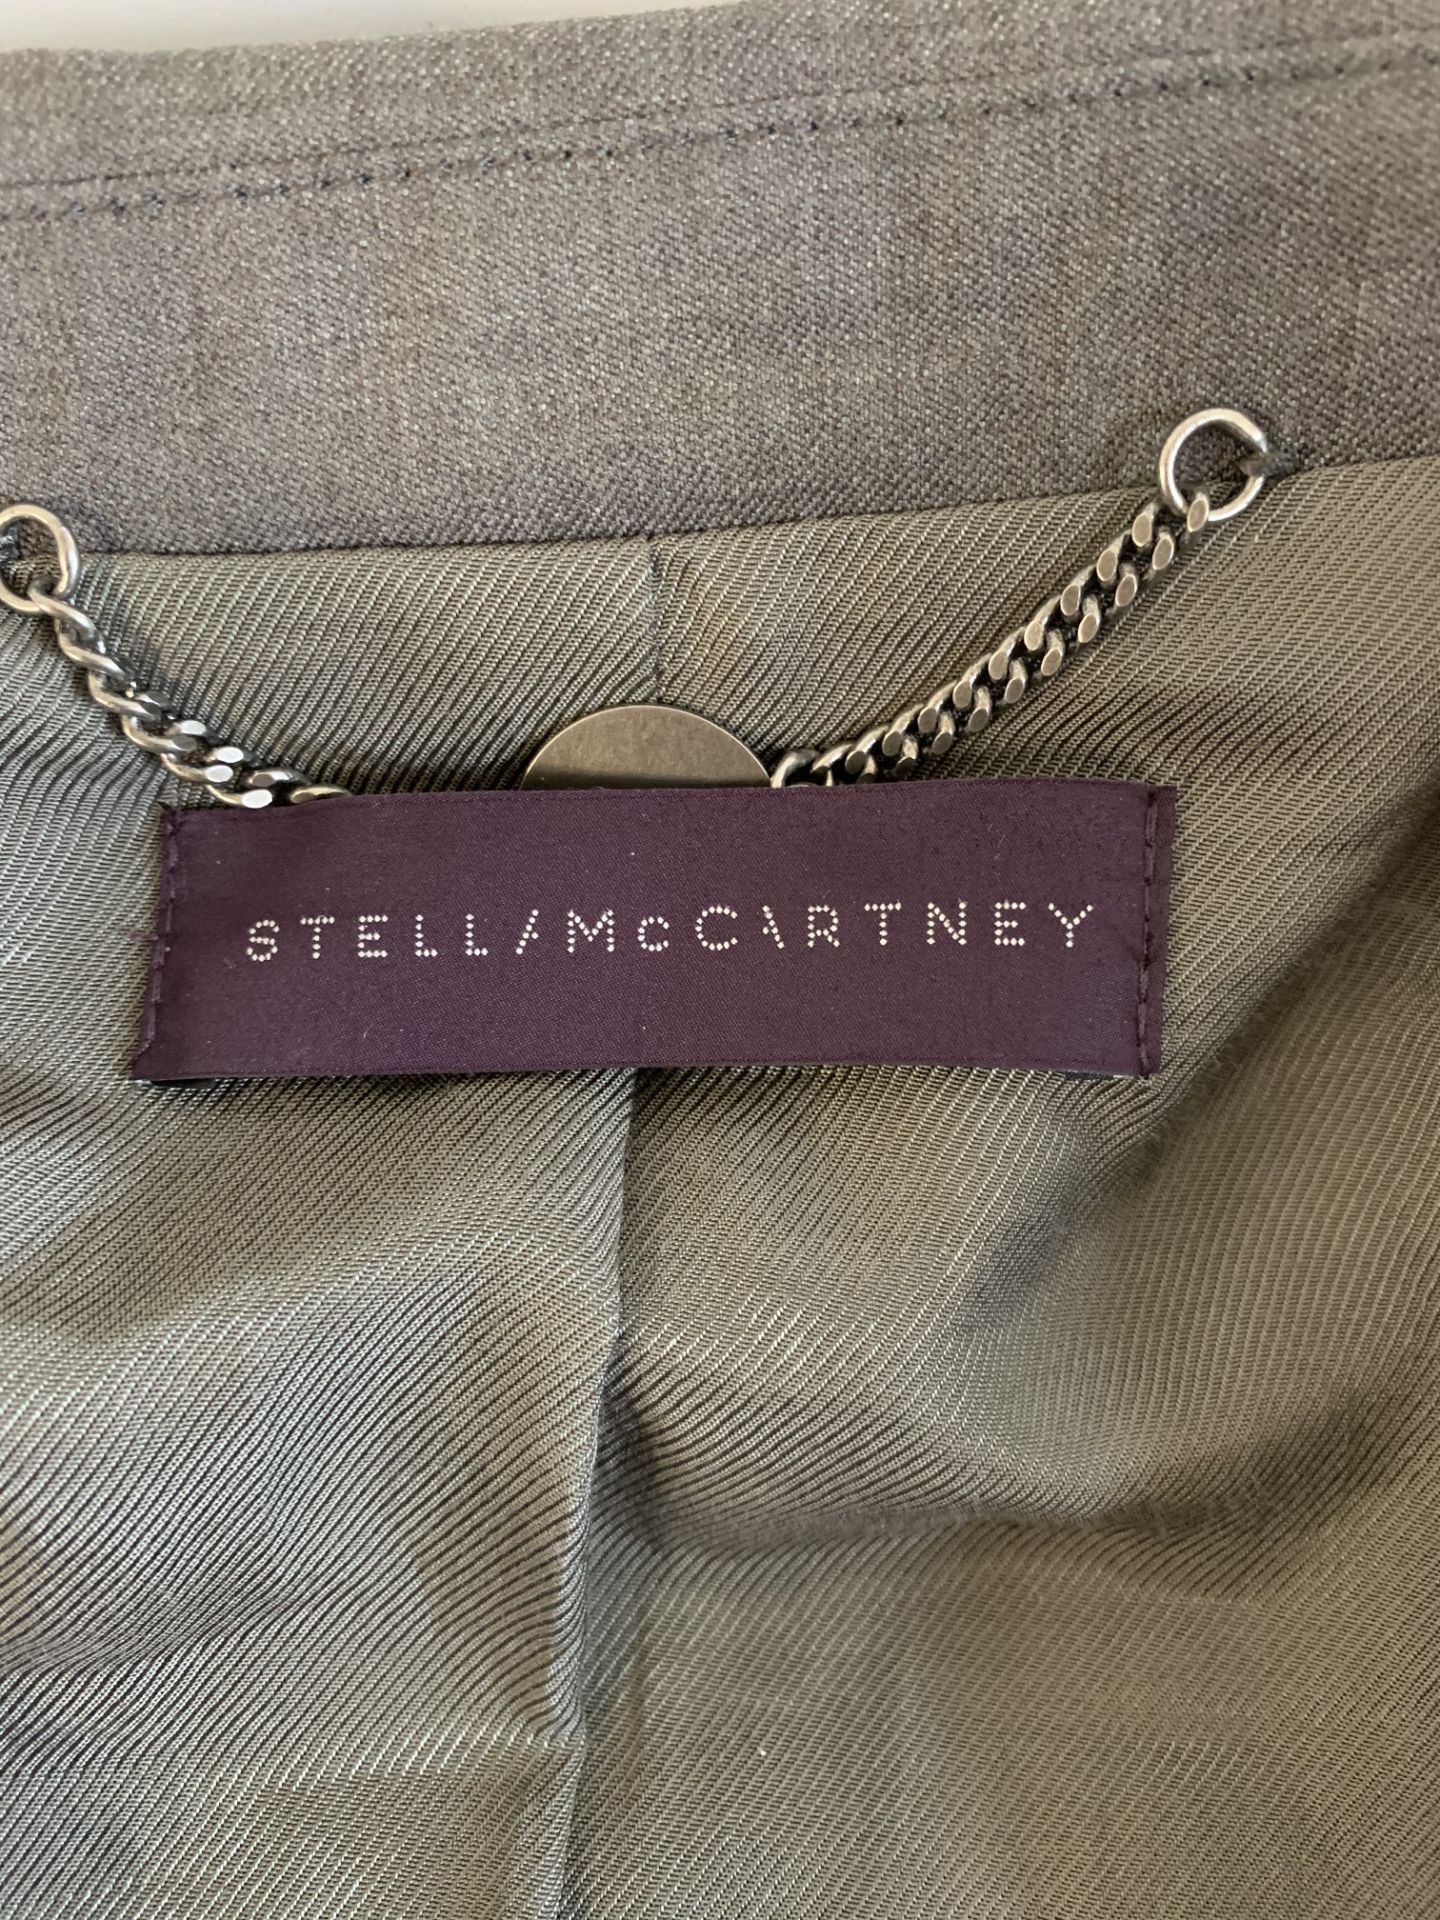 Stella McCartney Grey Wool Blazer RRP £998.00 - Image 3 of 4